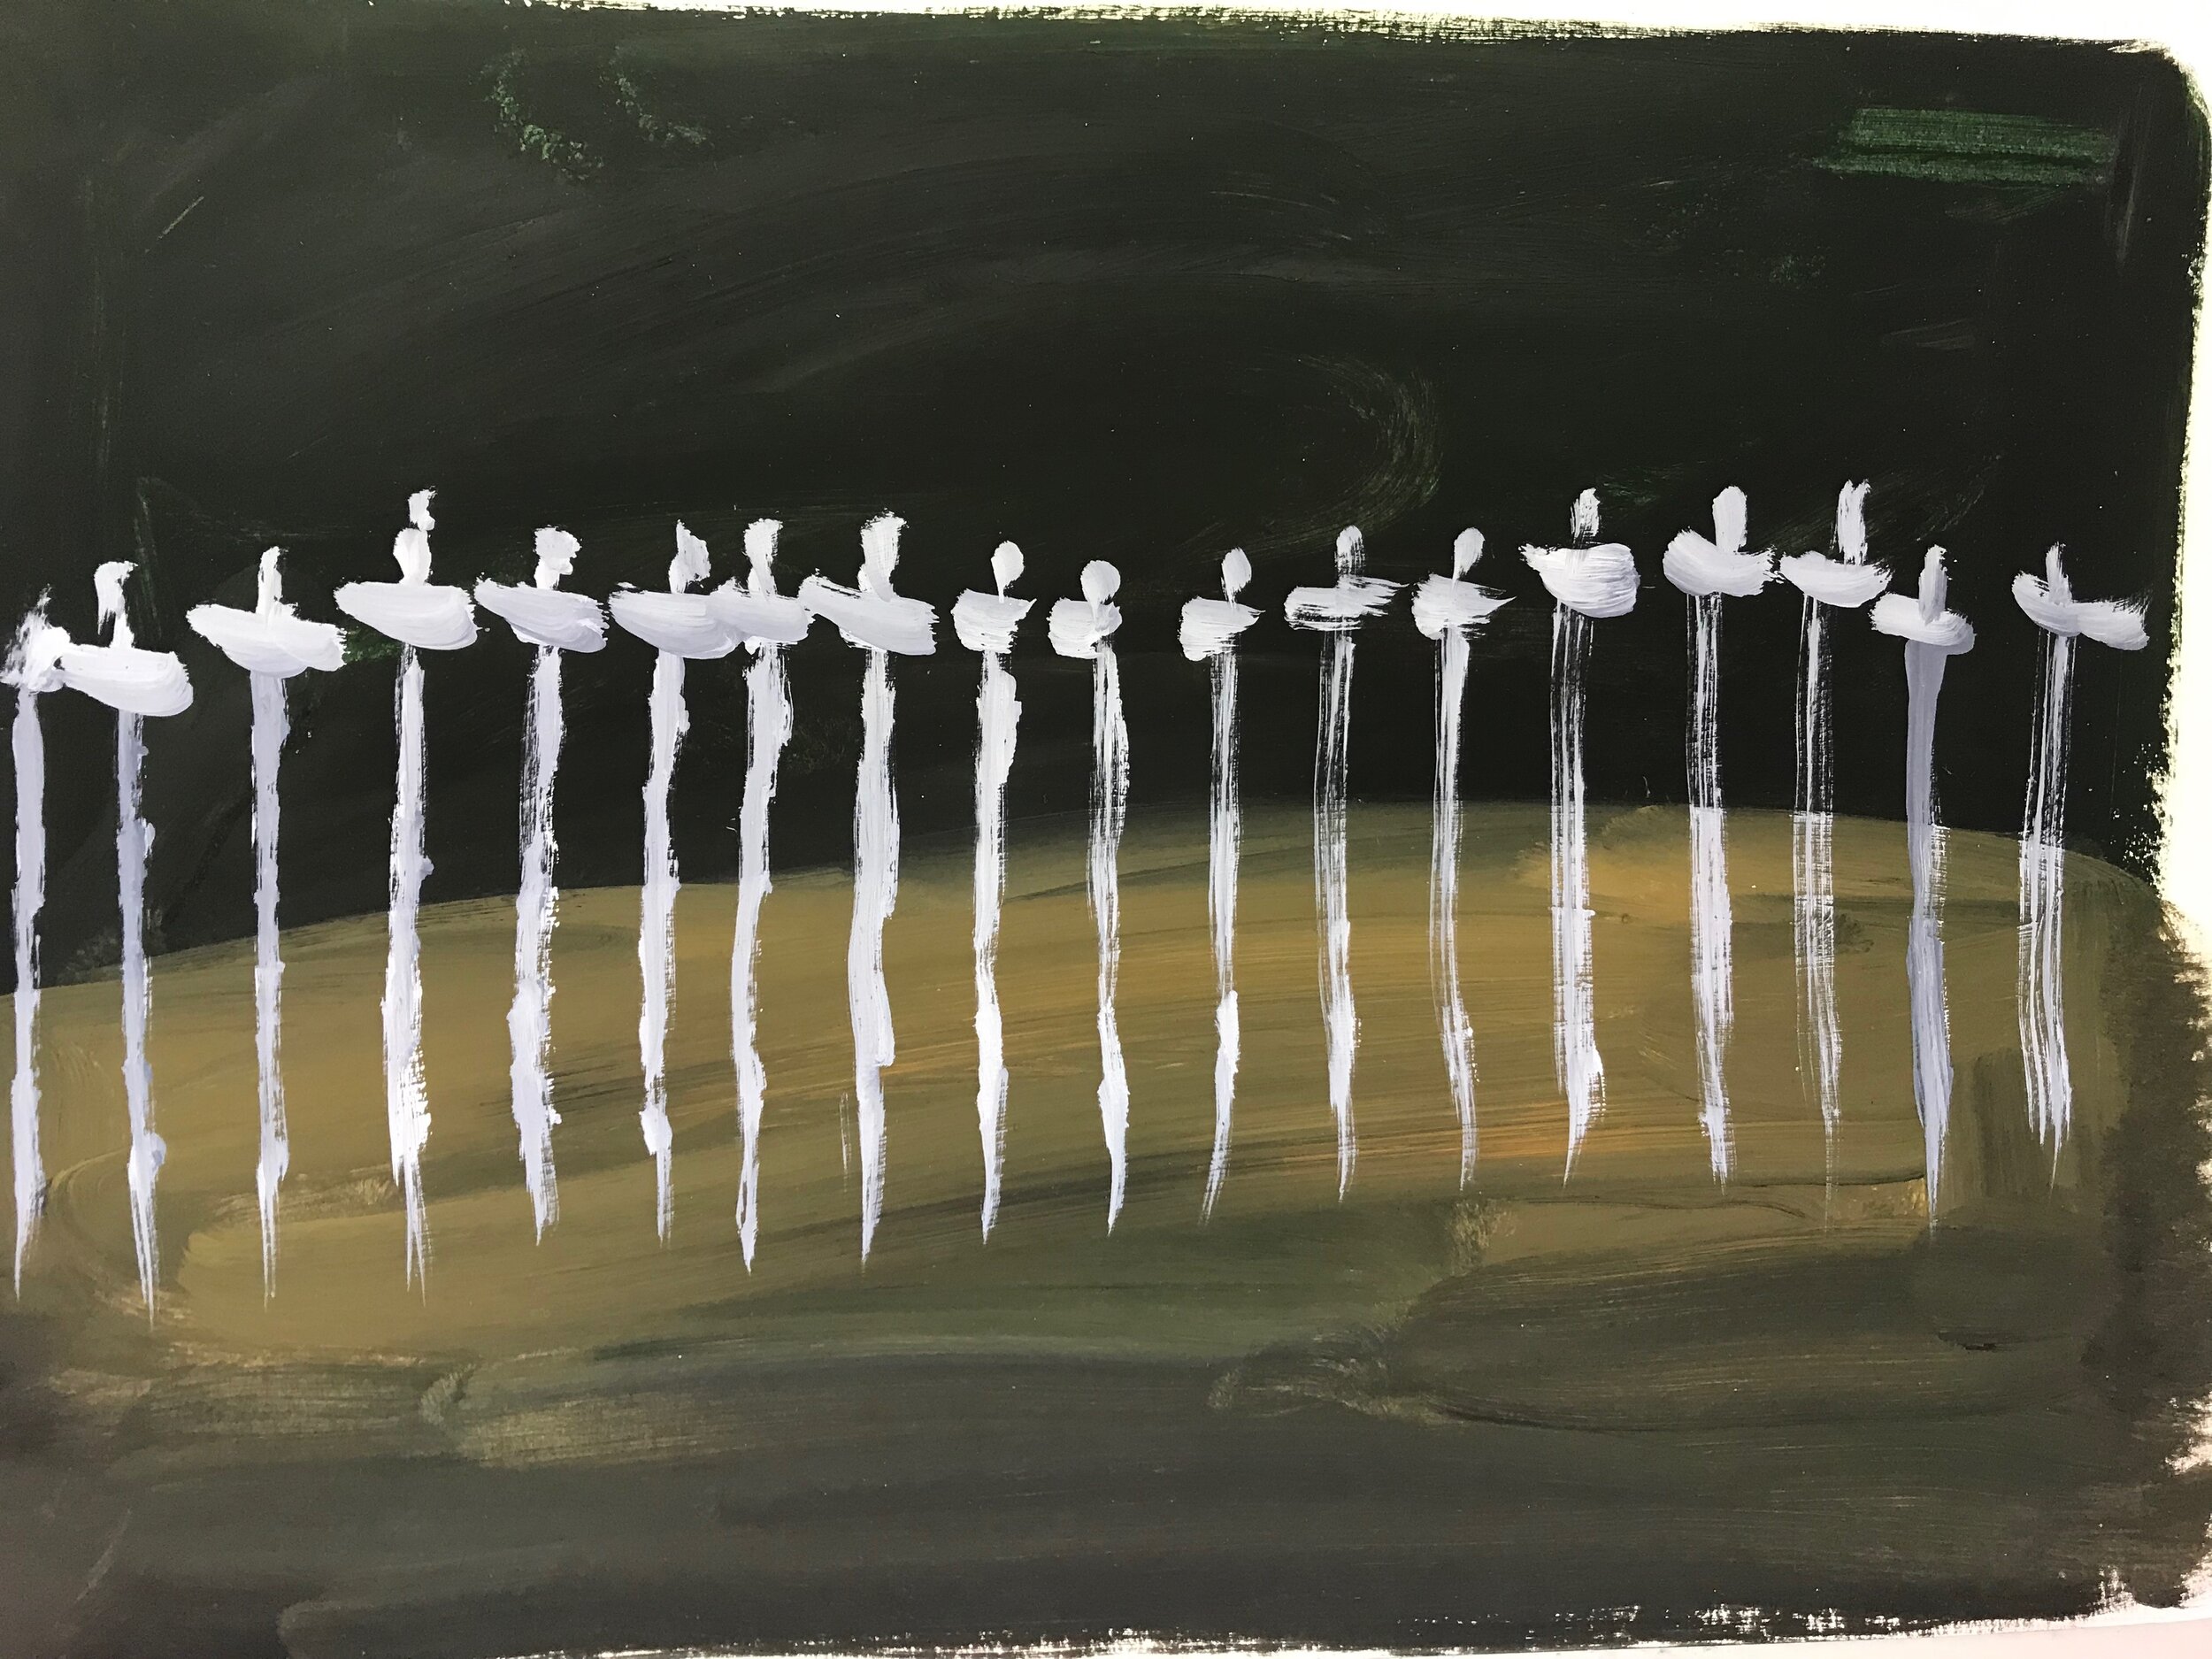 Swords on a meadow 29x21cm, oil on paper 2019